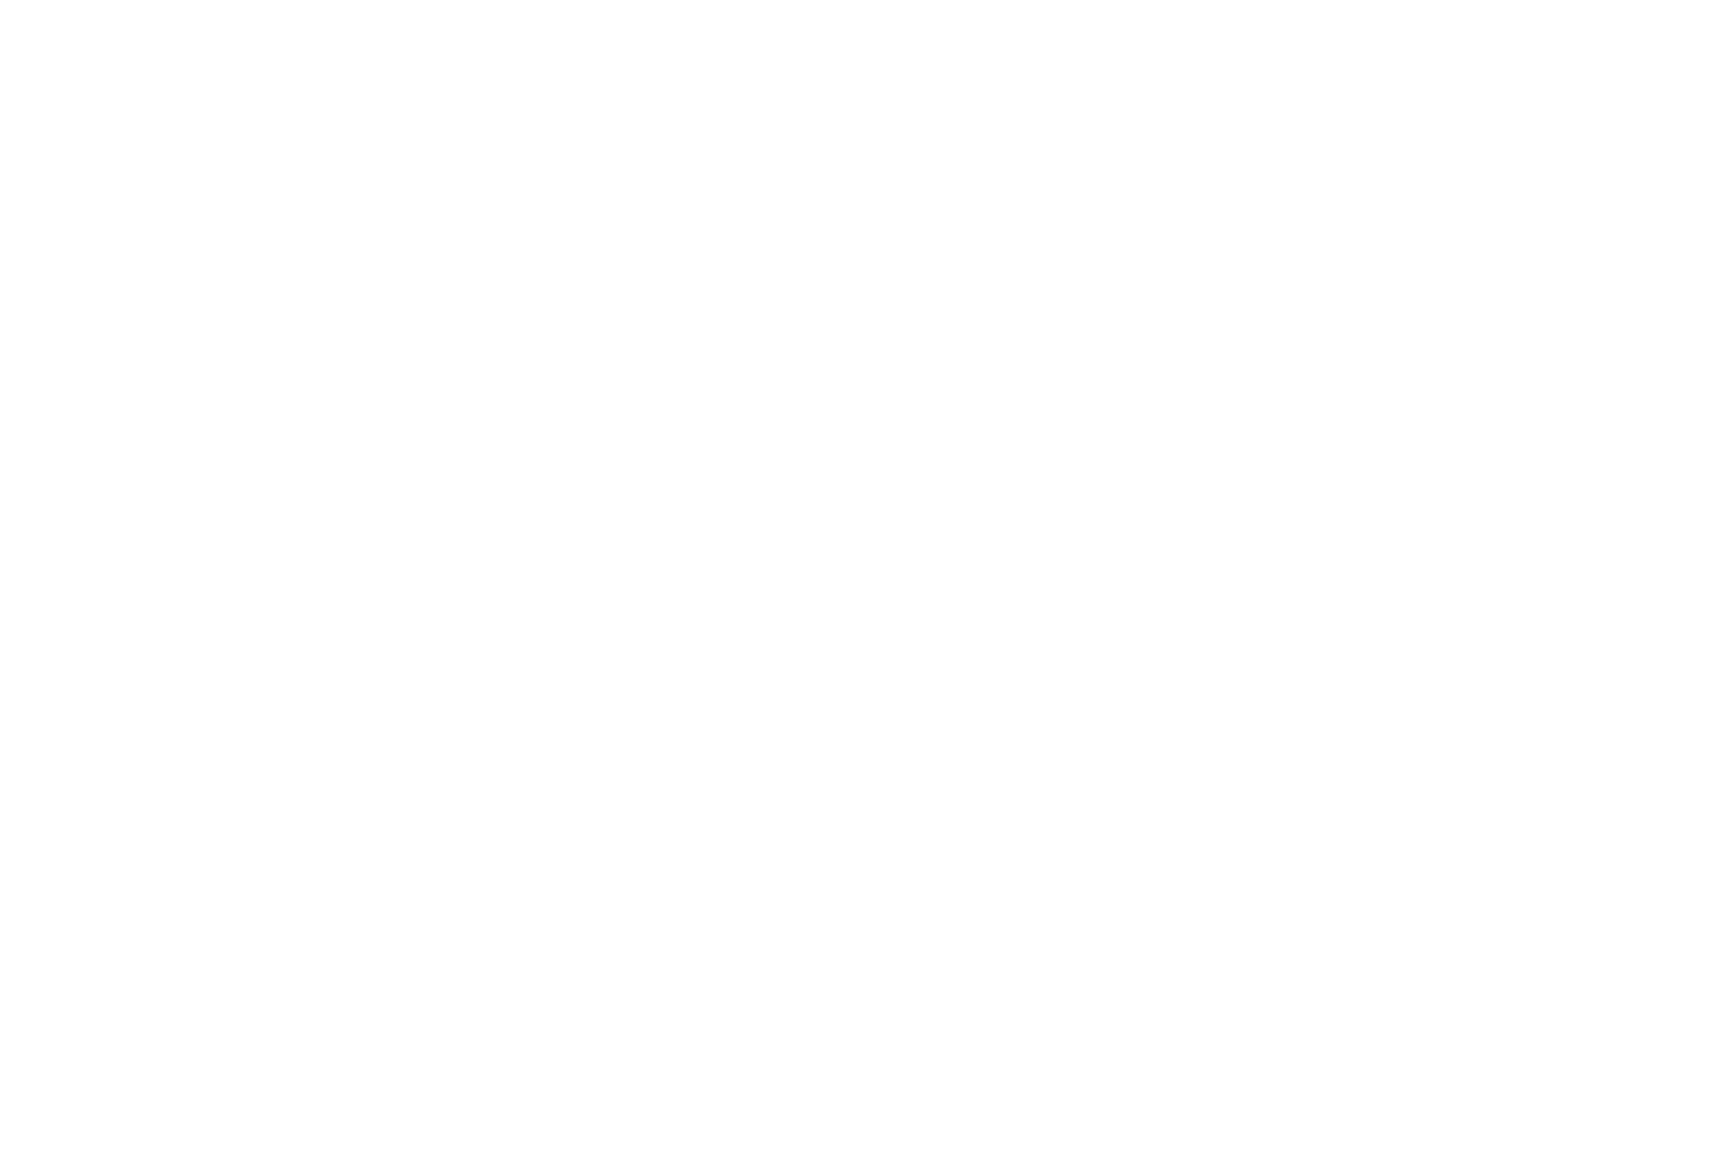 OFFICIAL SELECTION - FESTPRO Film Festival - 2021